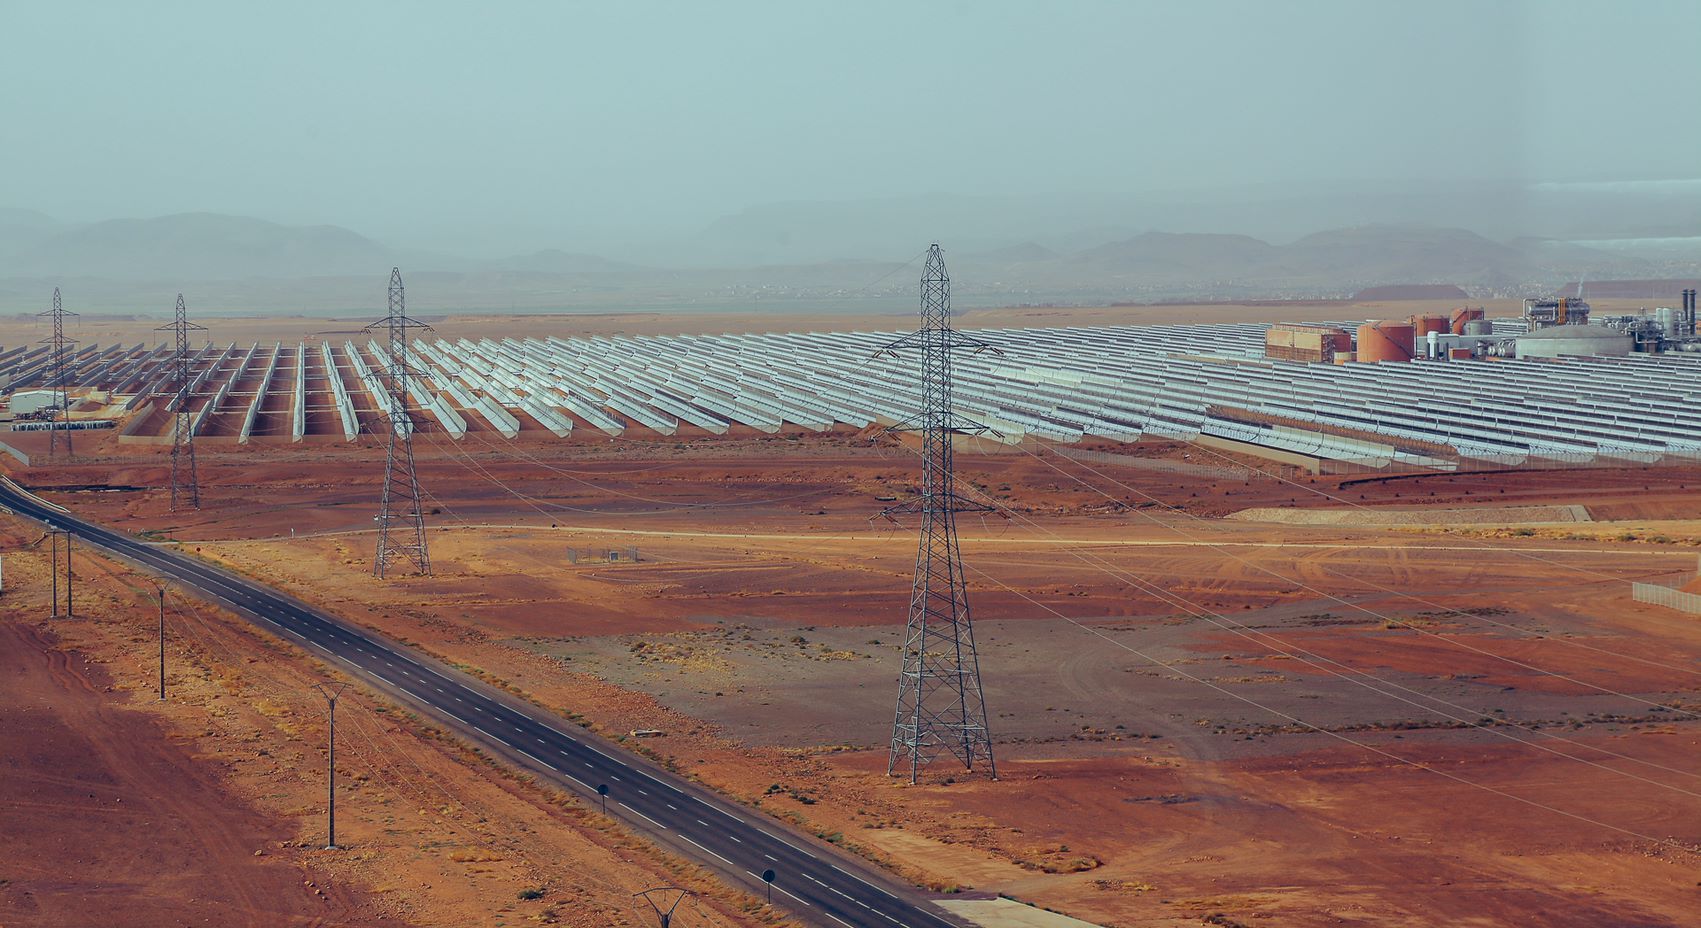 Morocco's Energy Strategy